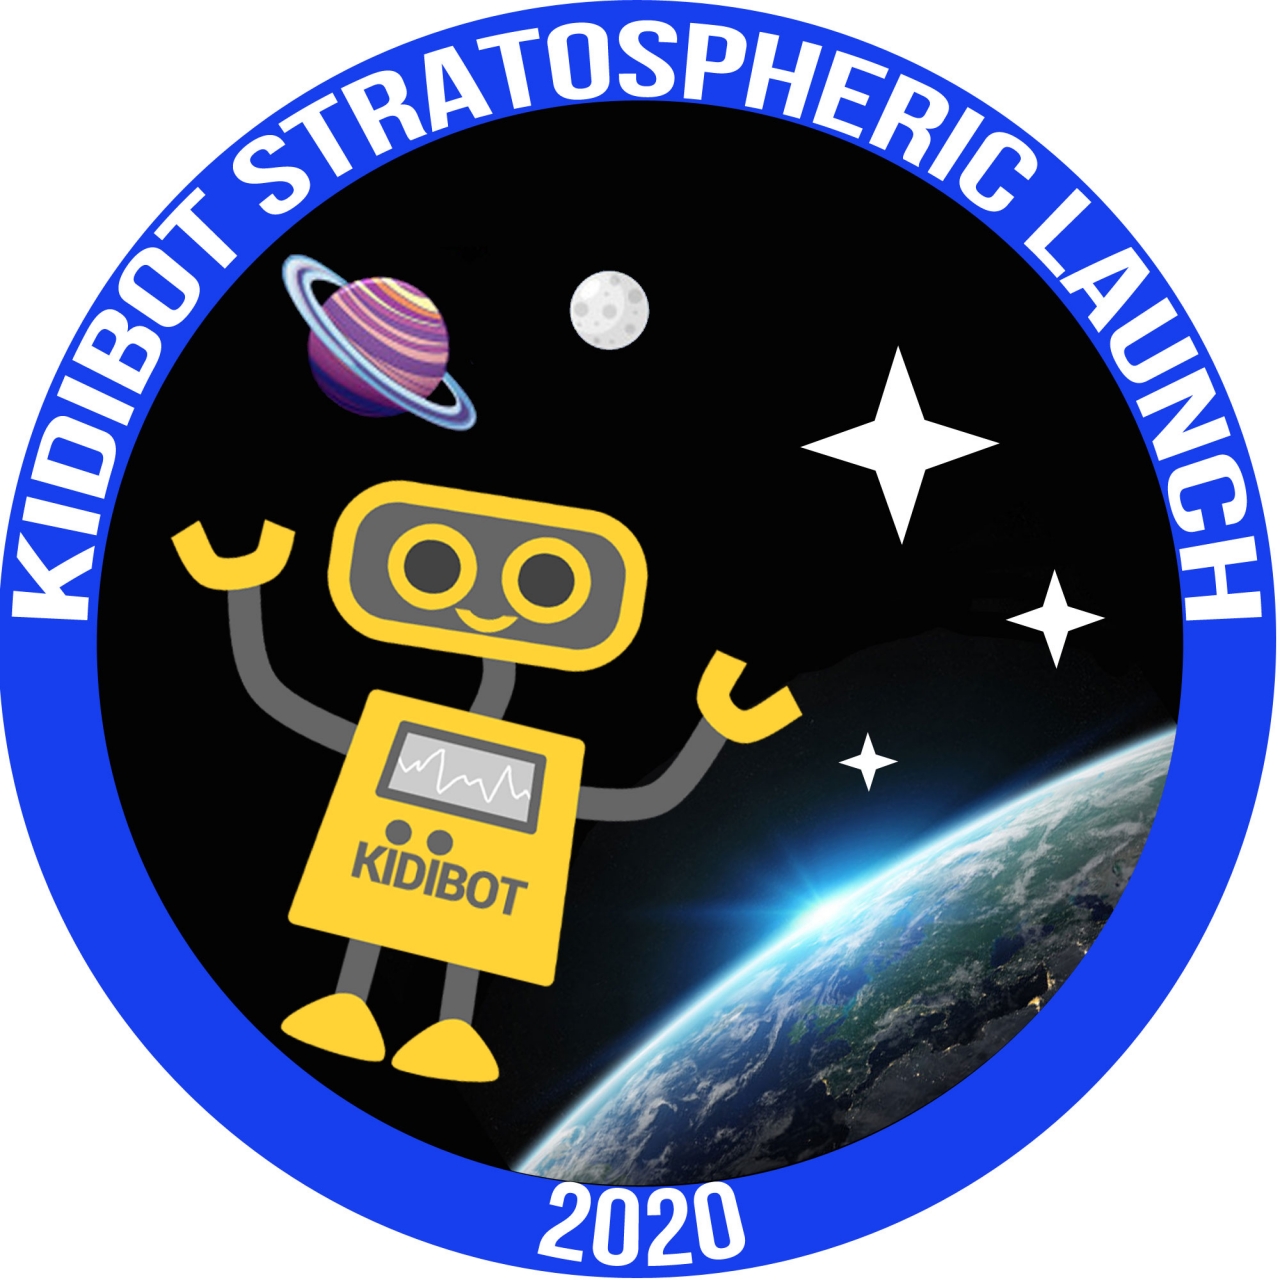 Kidibot Stratospheric Launch